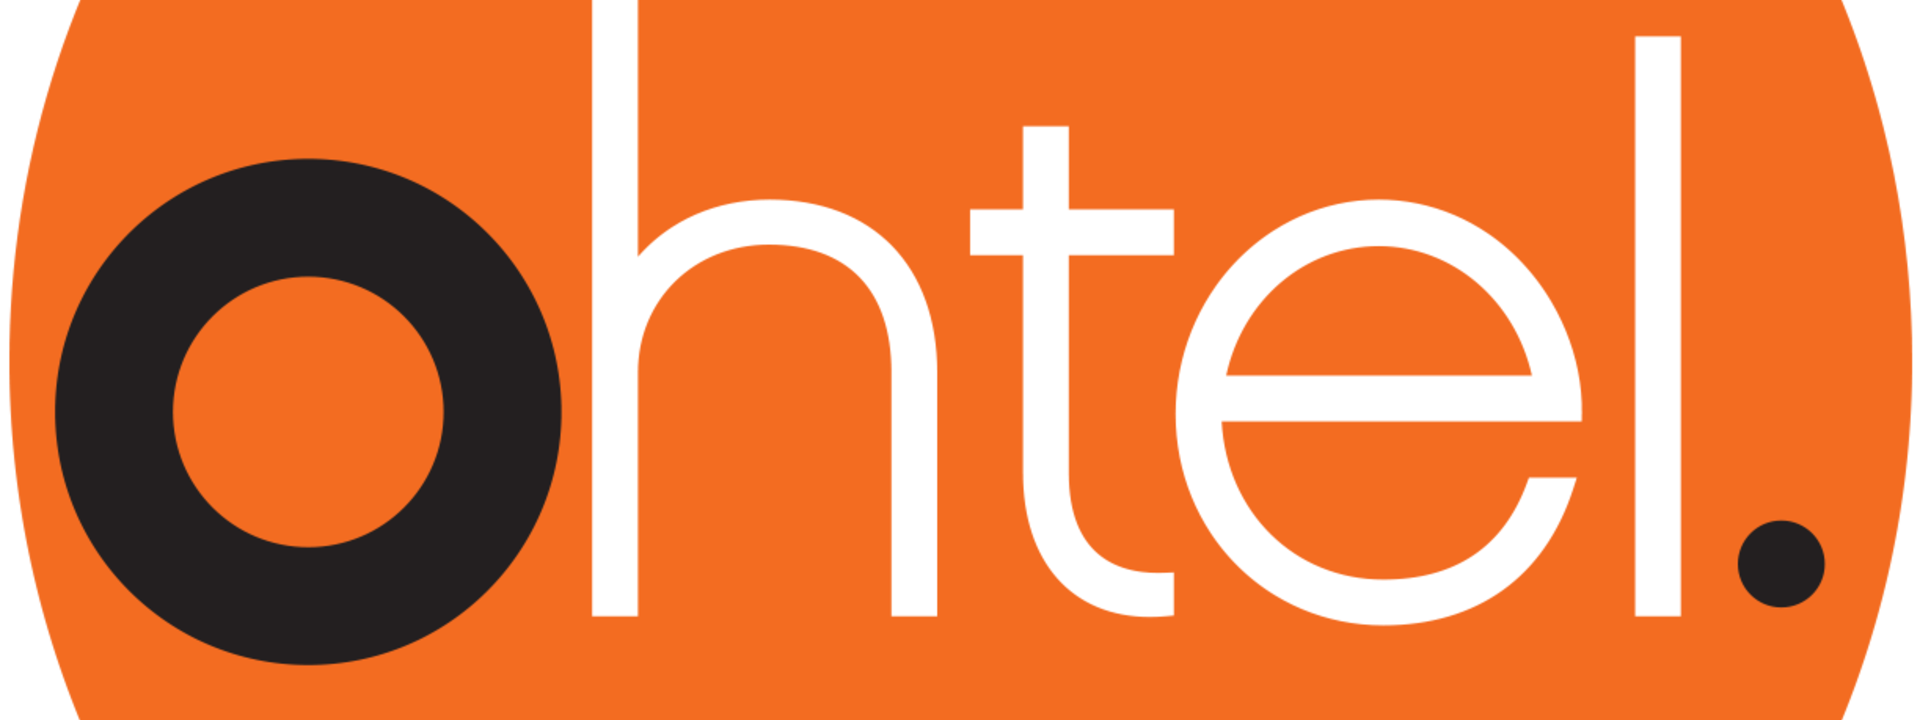 Large Ohtel orange logo.png